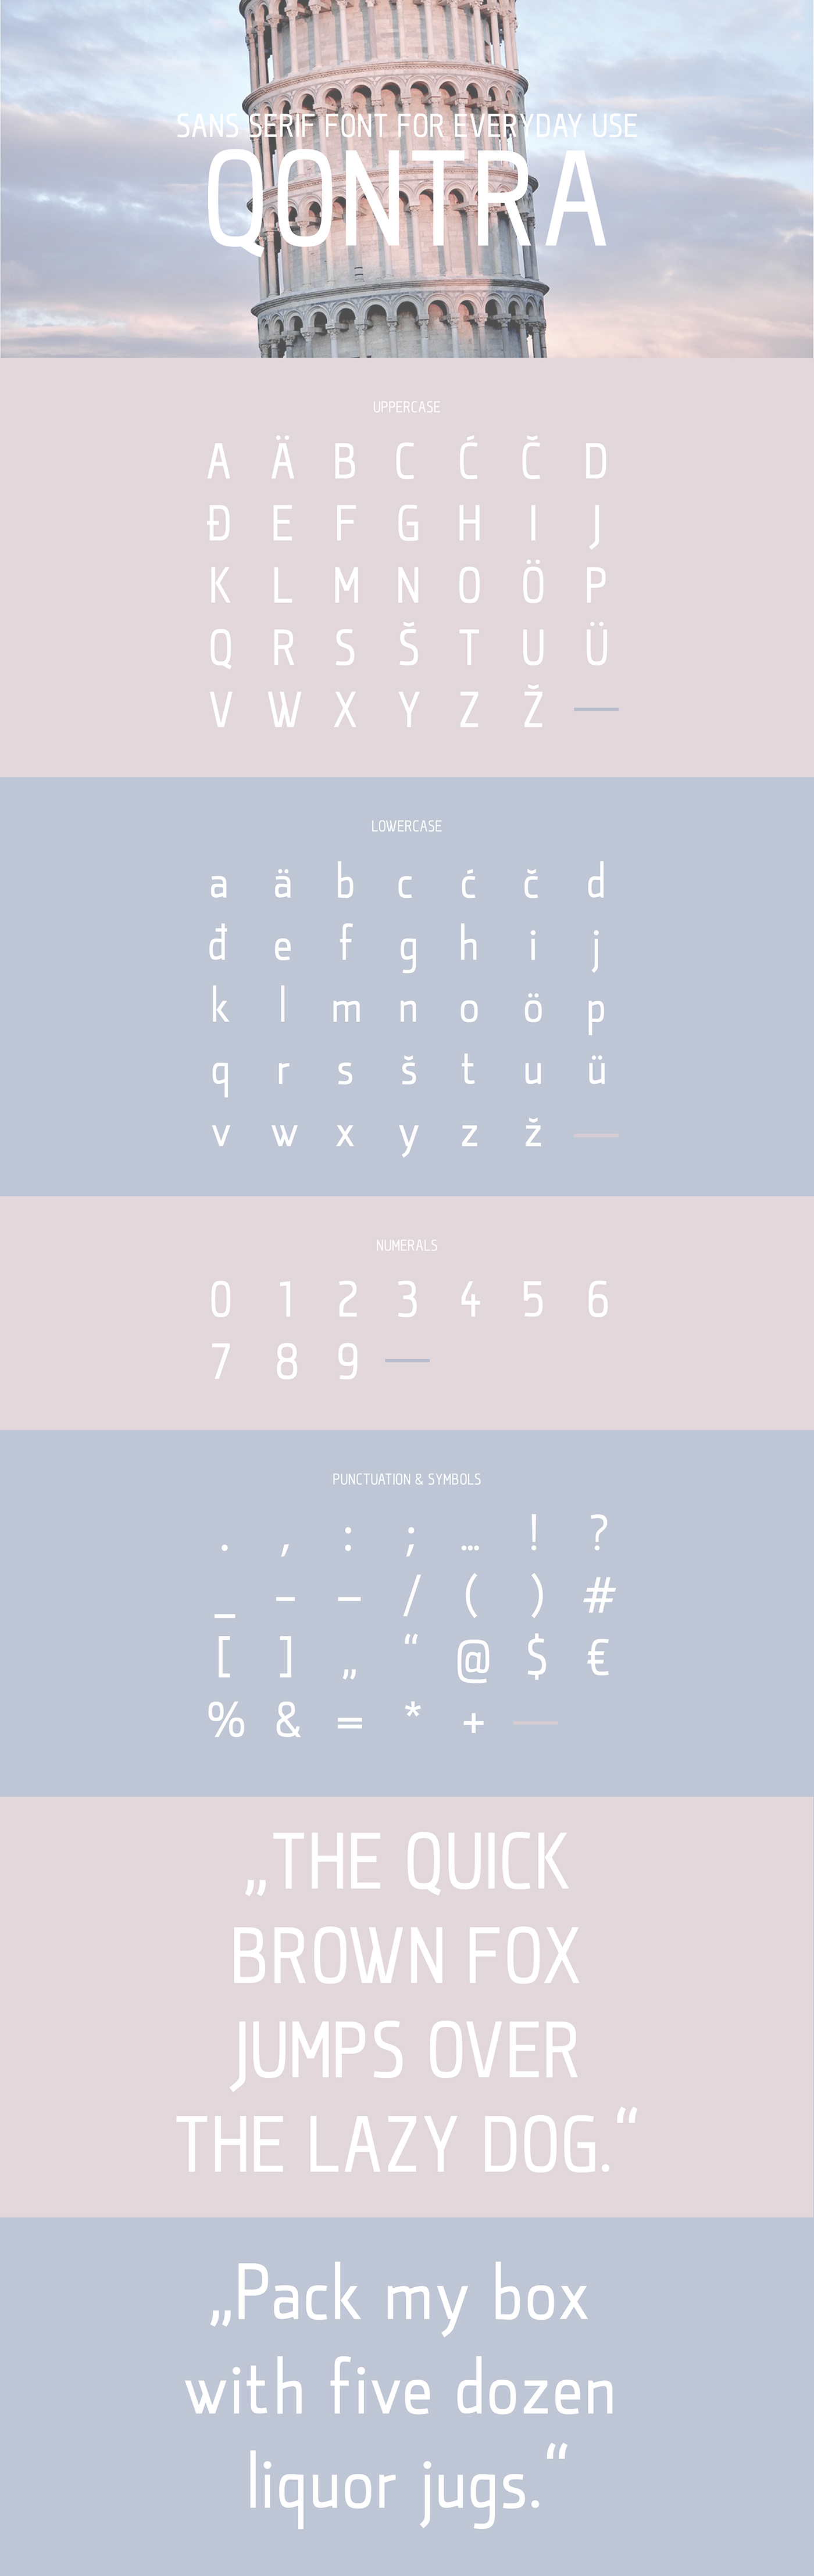 free type type design letters qontra Typeface specimen